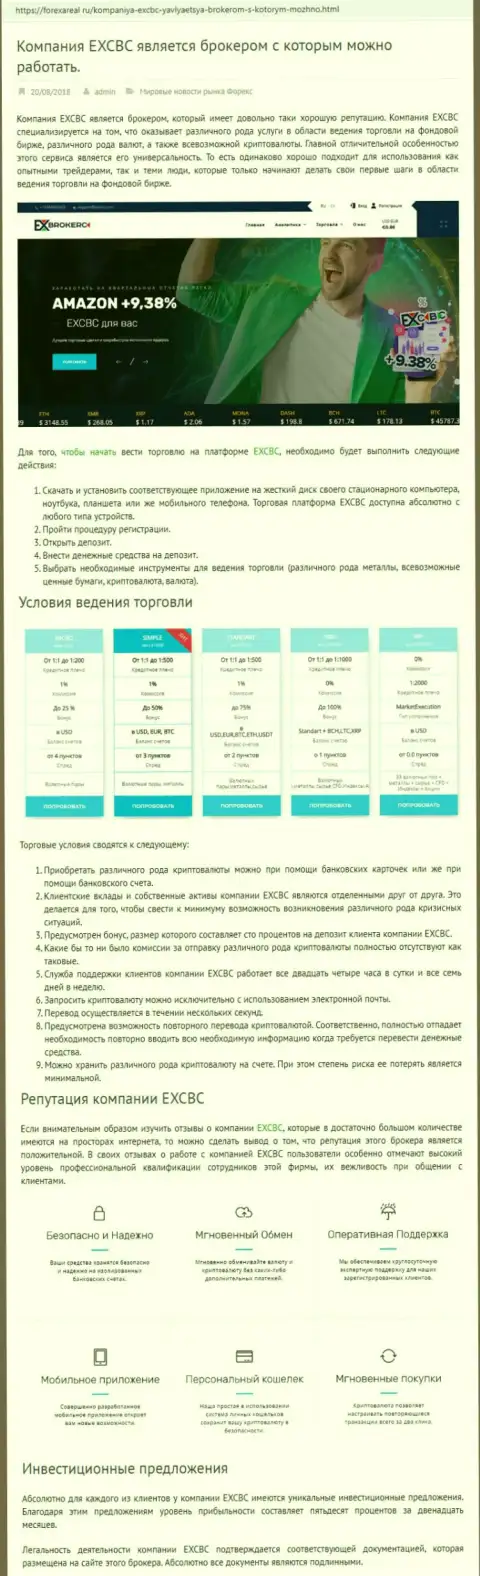 Интернет-портал forexareal ru представил анализ деятельности Форекс организации EXCBC